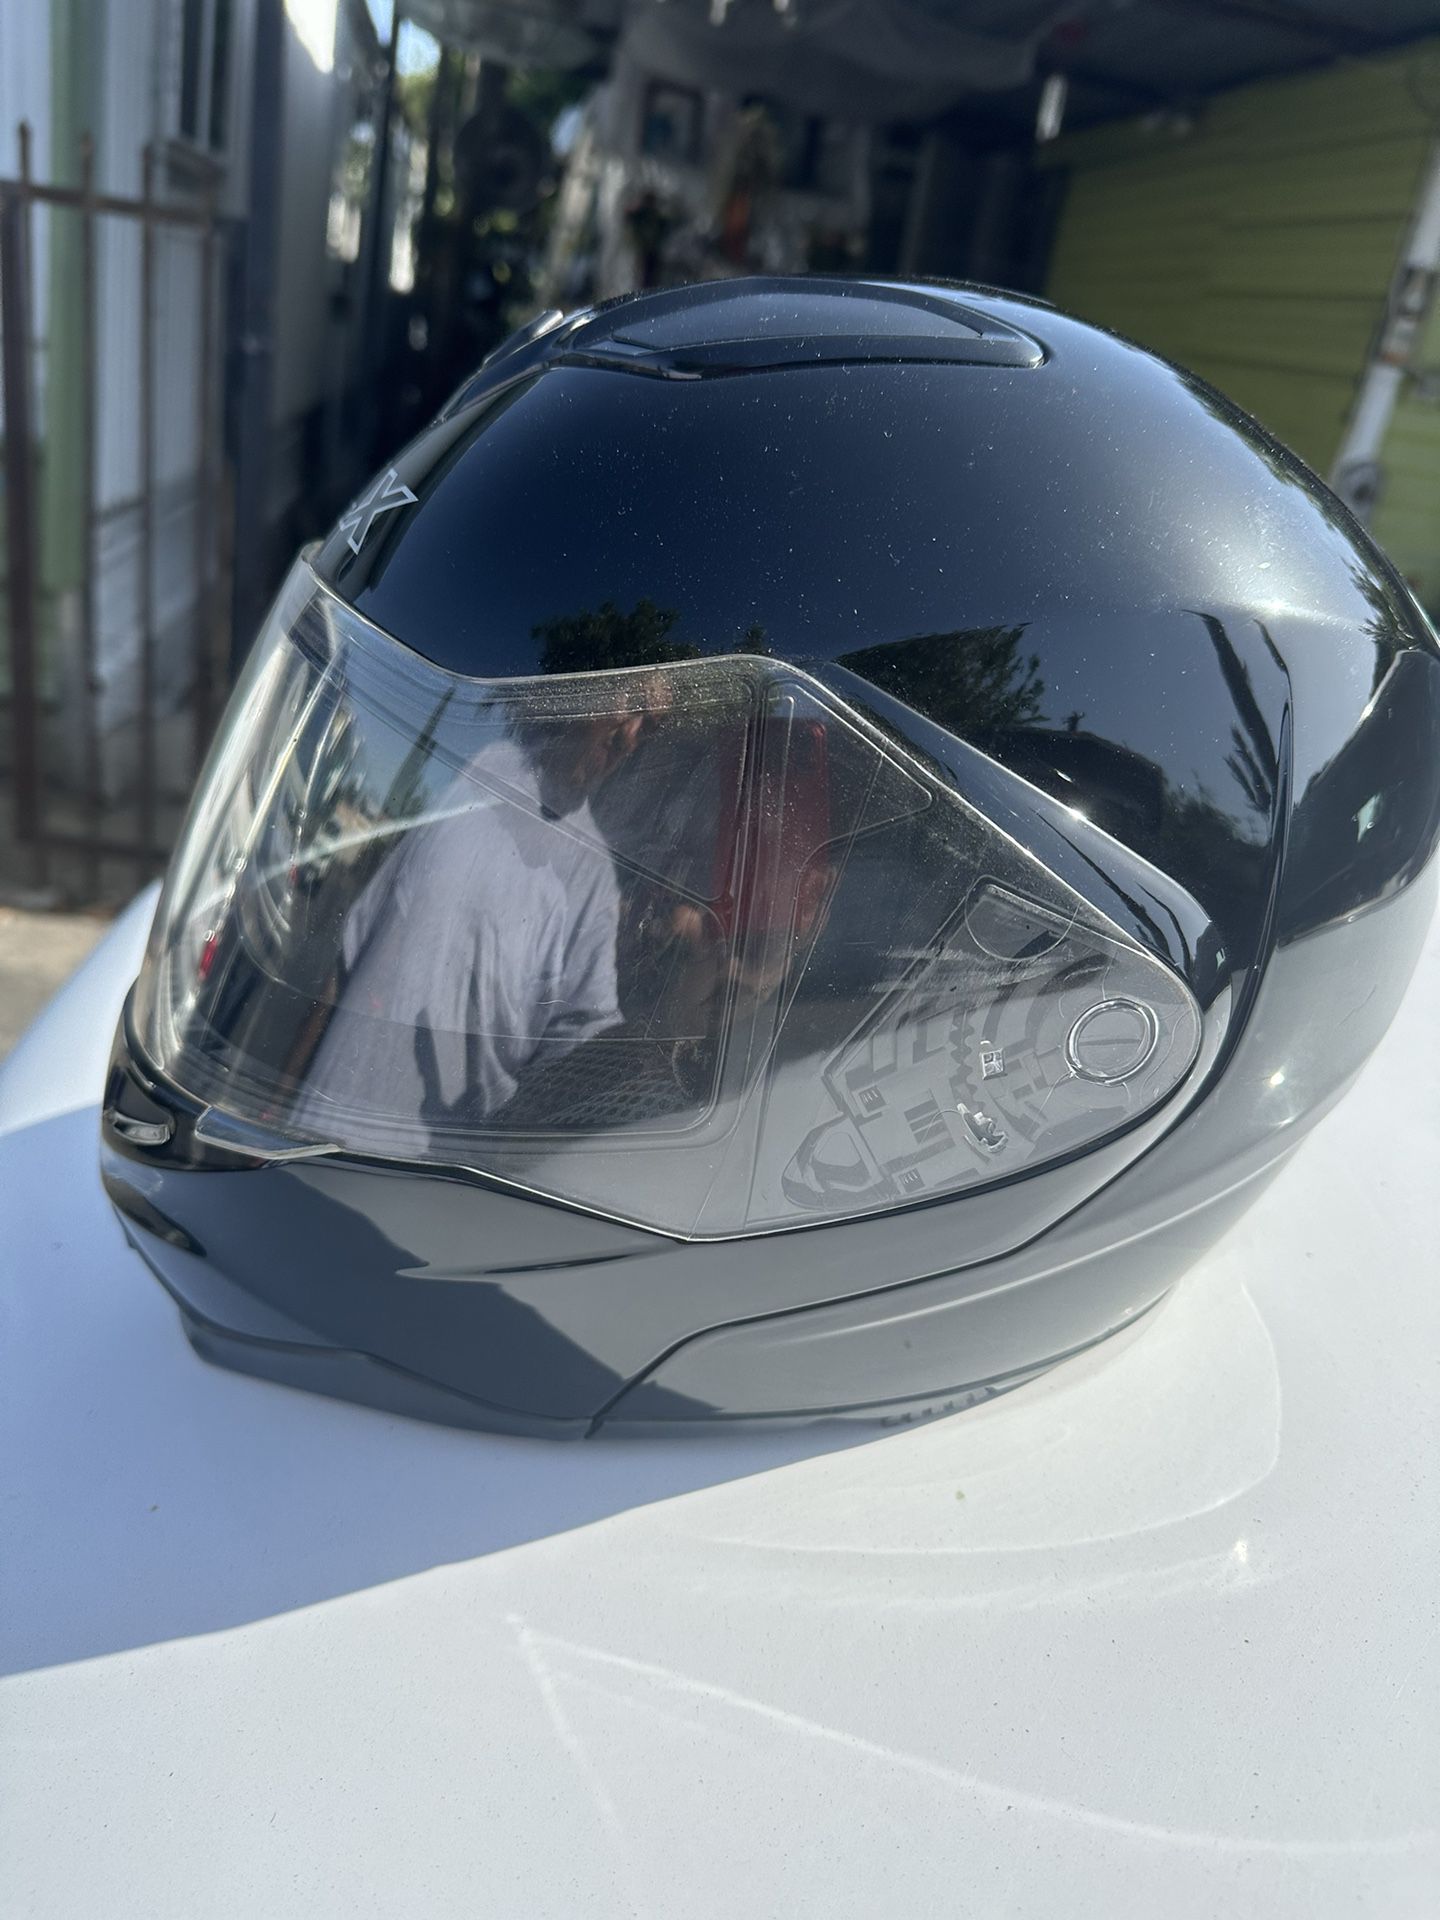 Glx Helmet Black Gloss Size S